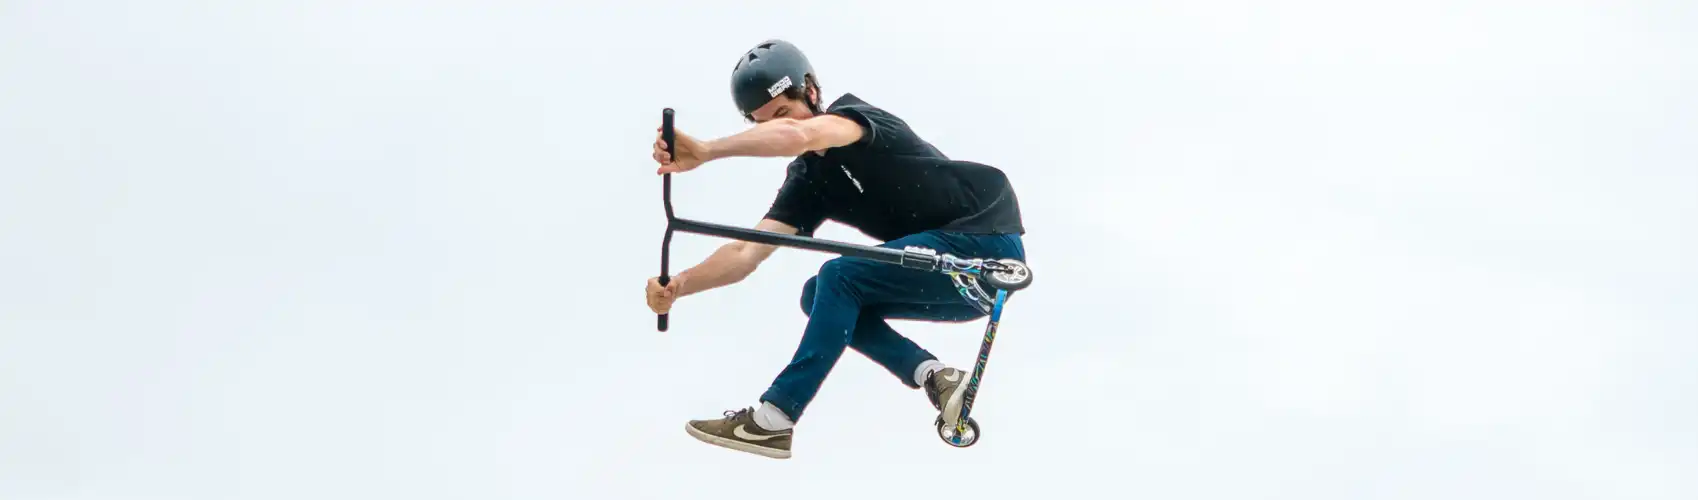 mgp-origin-extreme-scooter